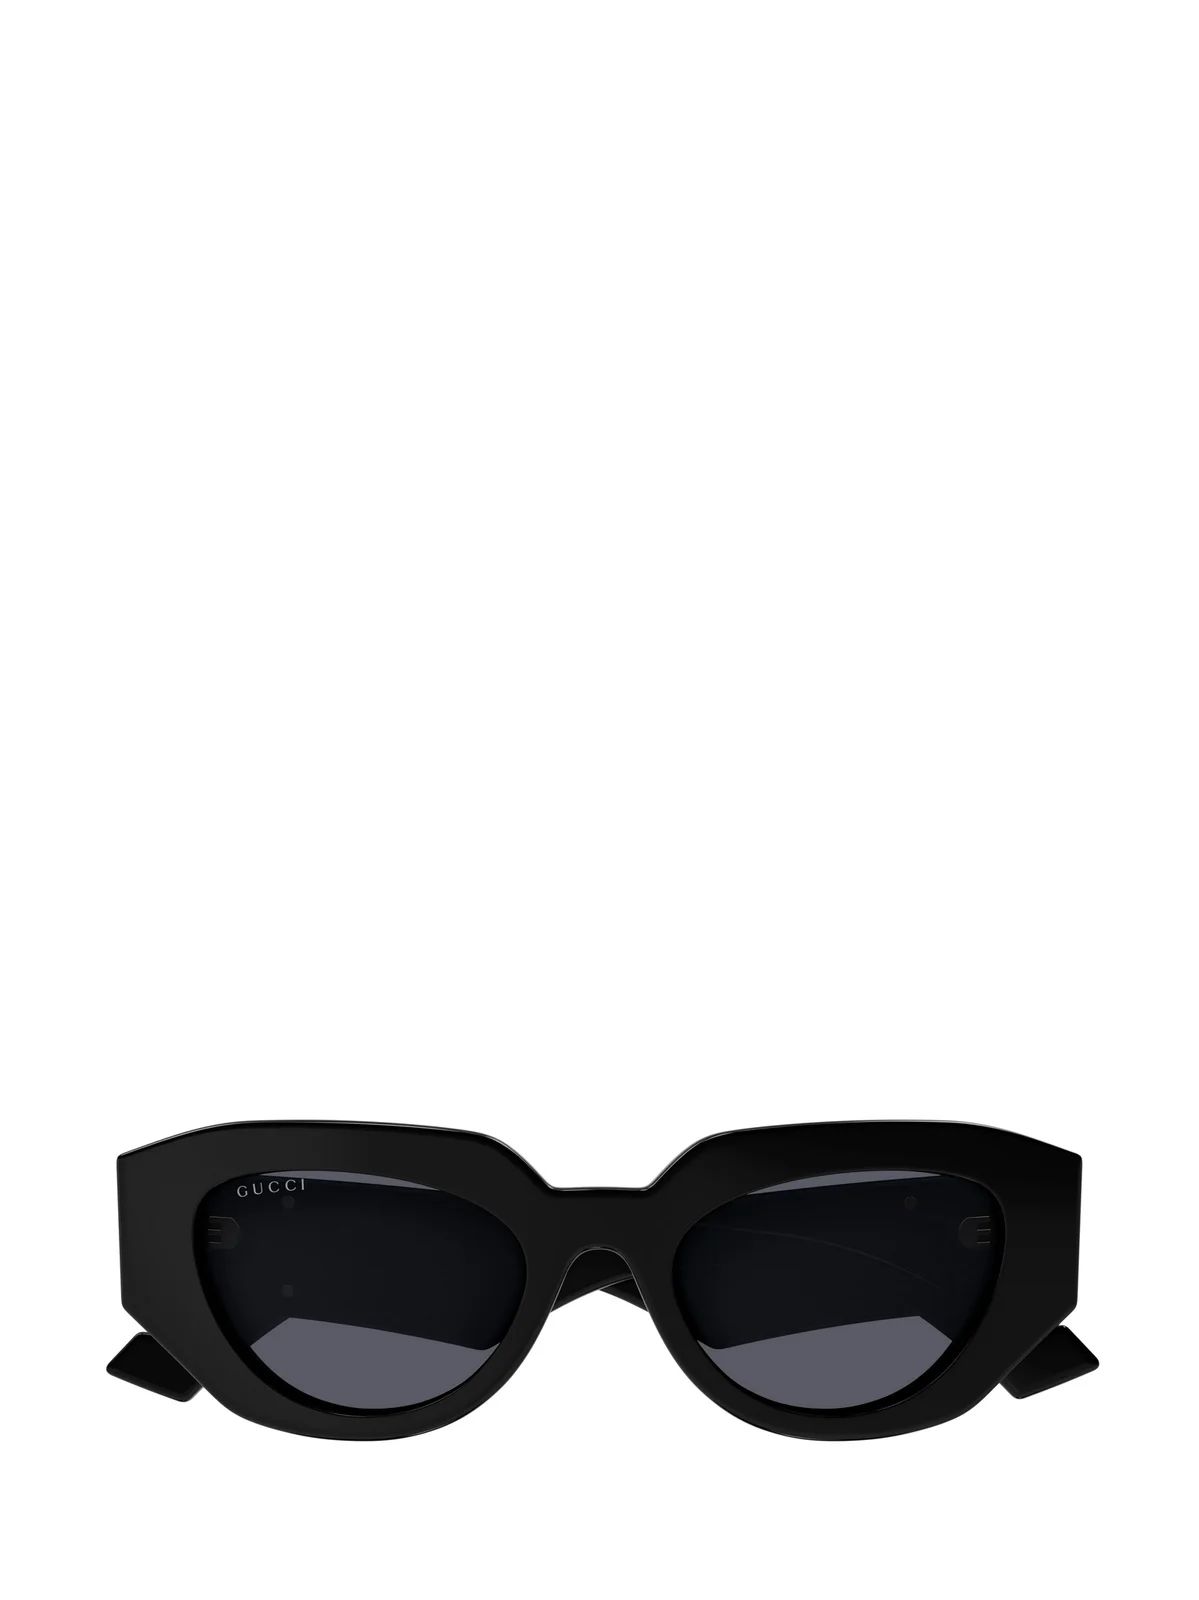 Gucci Eyewear Geometric Frame Sunglasses | Cettire Global